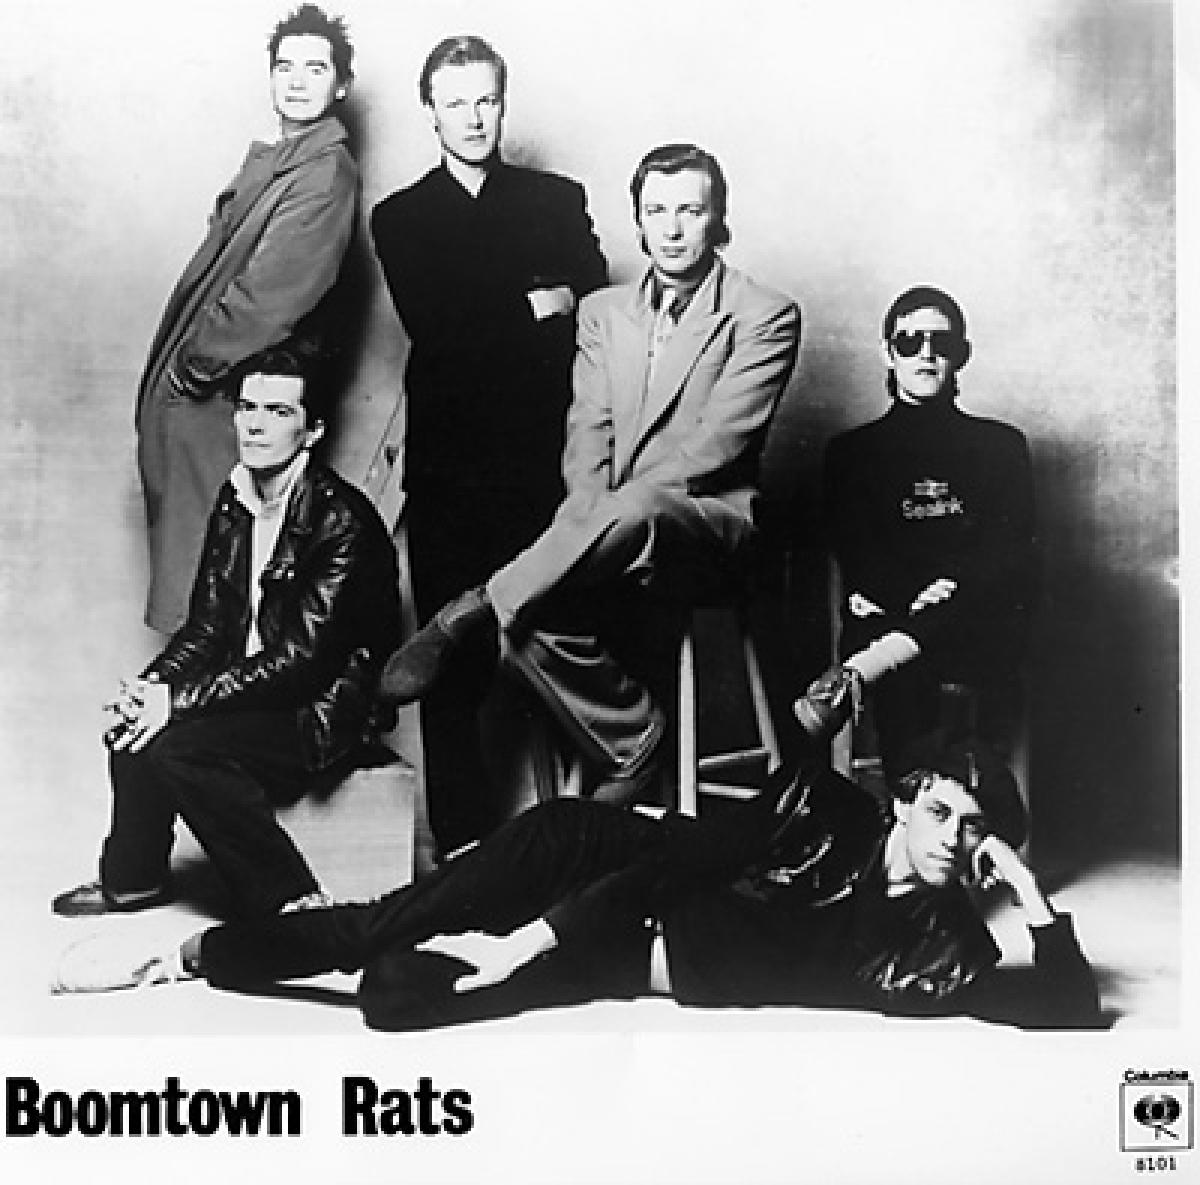 Boomtown Rats Concert & Band Photos at Wolfgang's